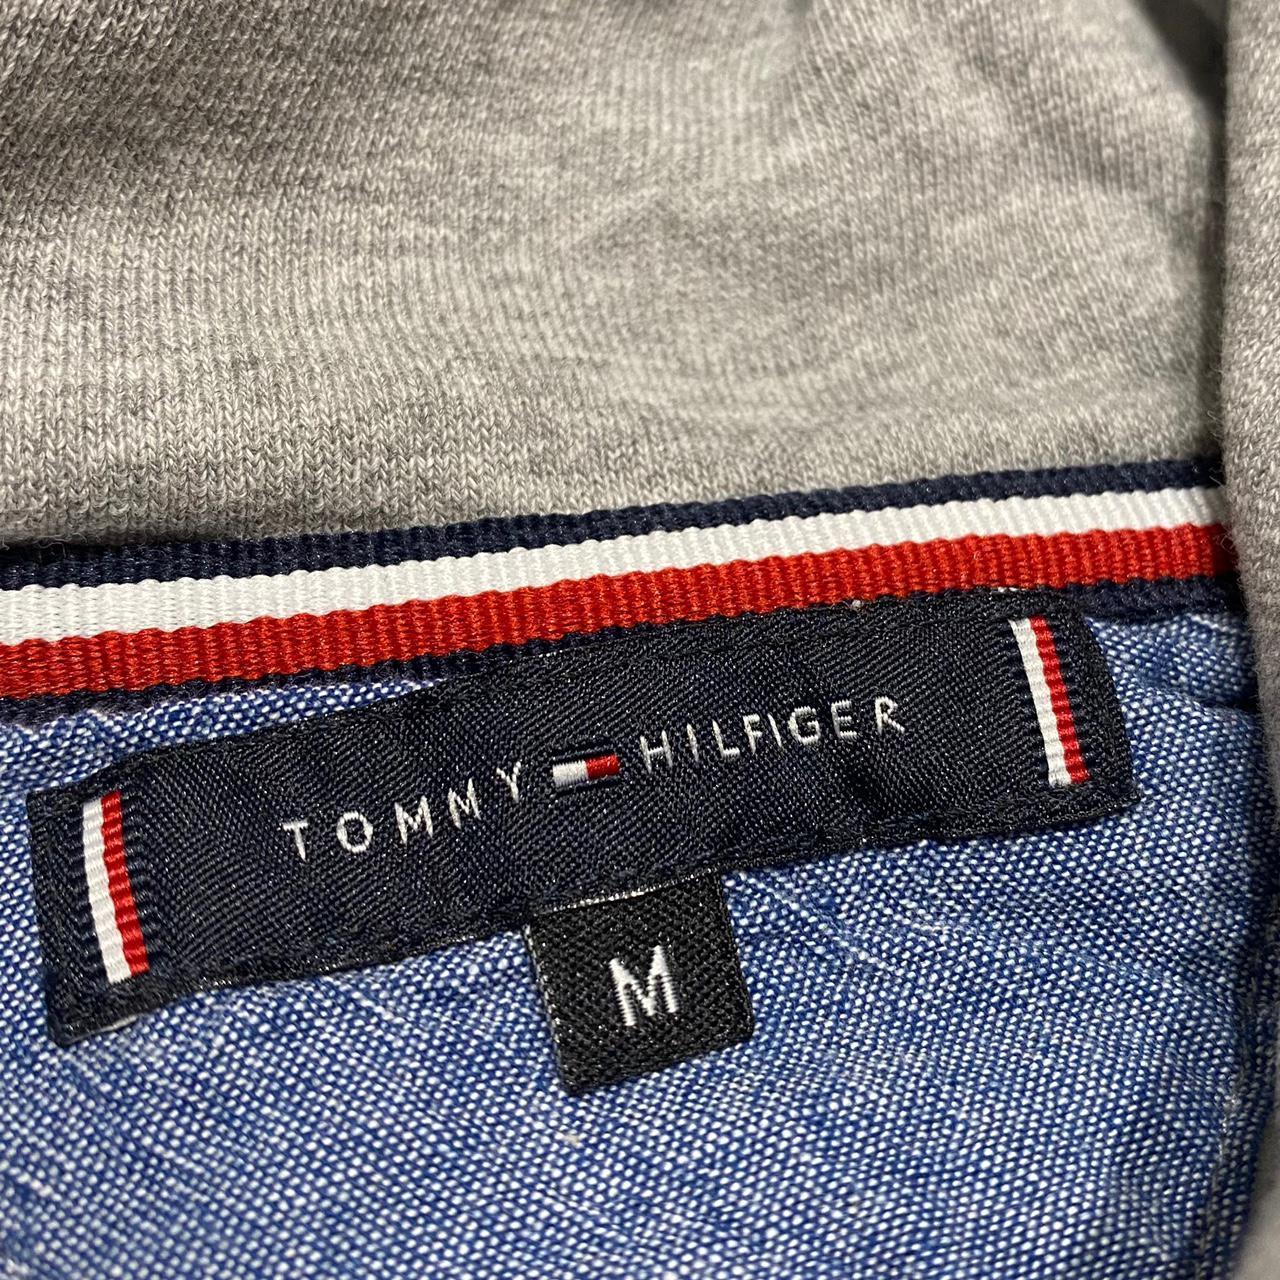 TOMMY HILFIGER / Tommy Jeans Hoodie Pullover Crop /... - Depop